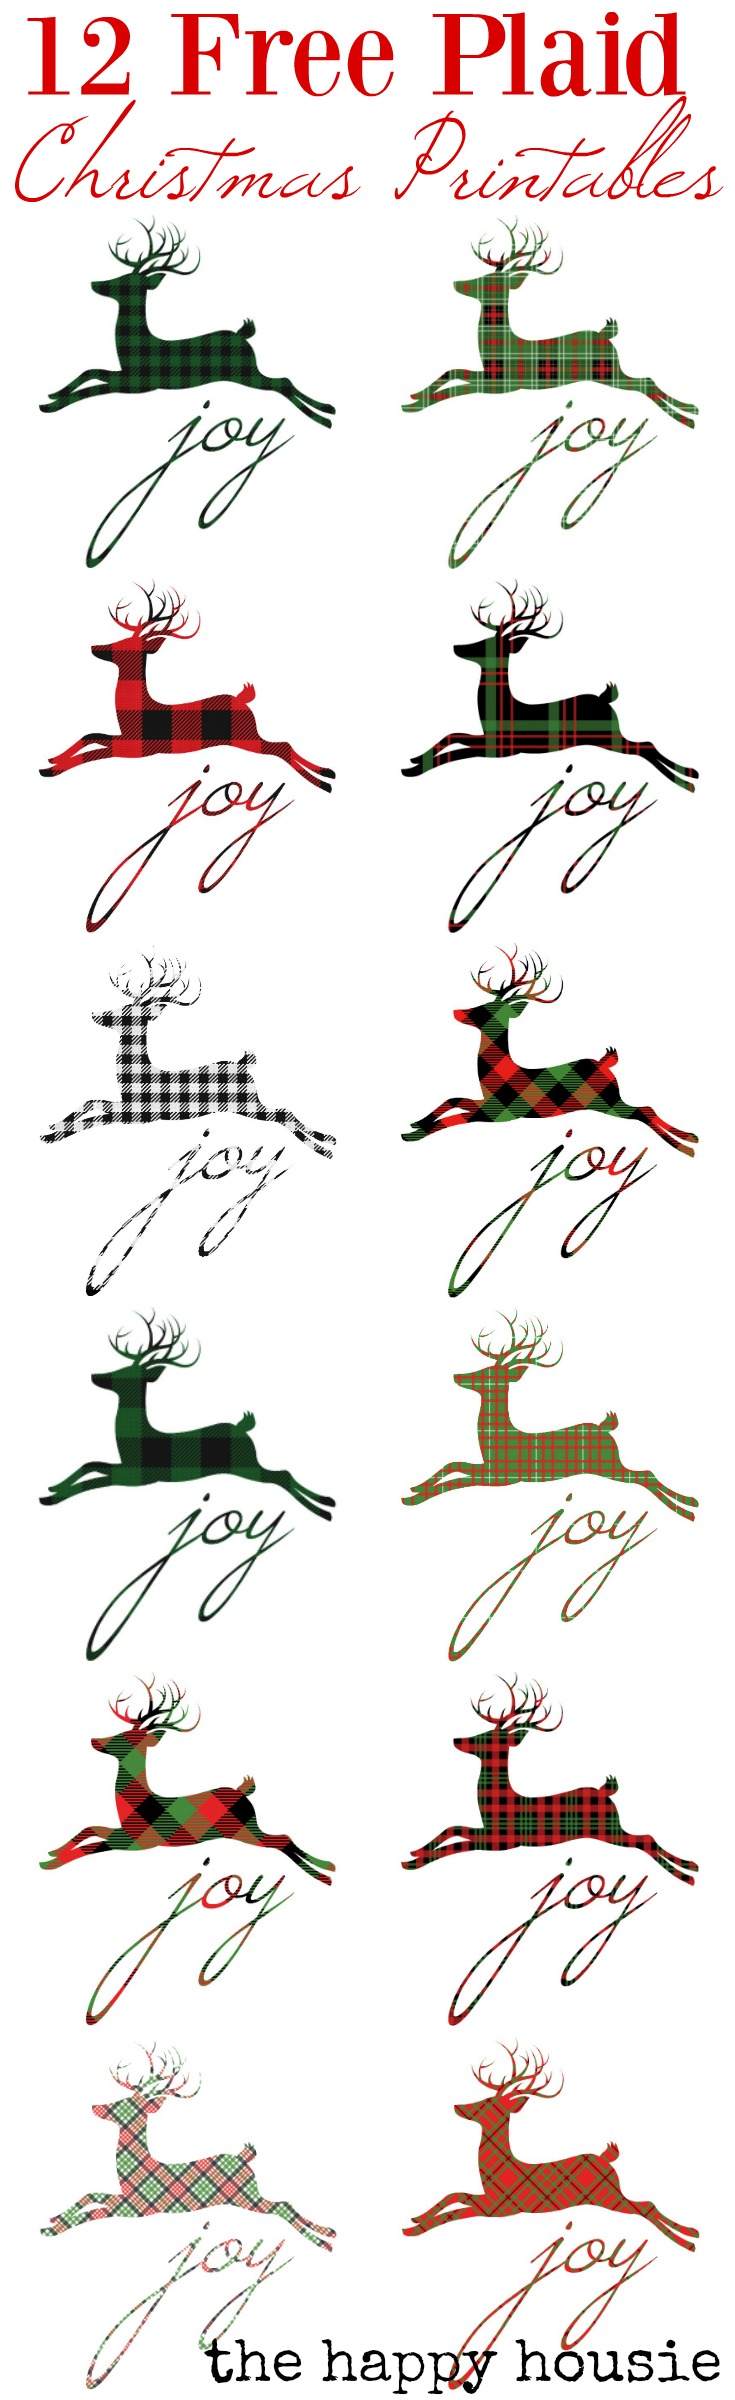 12-free-plaid-christmas-printables-at-the-happy-housie